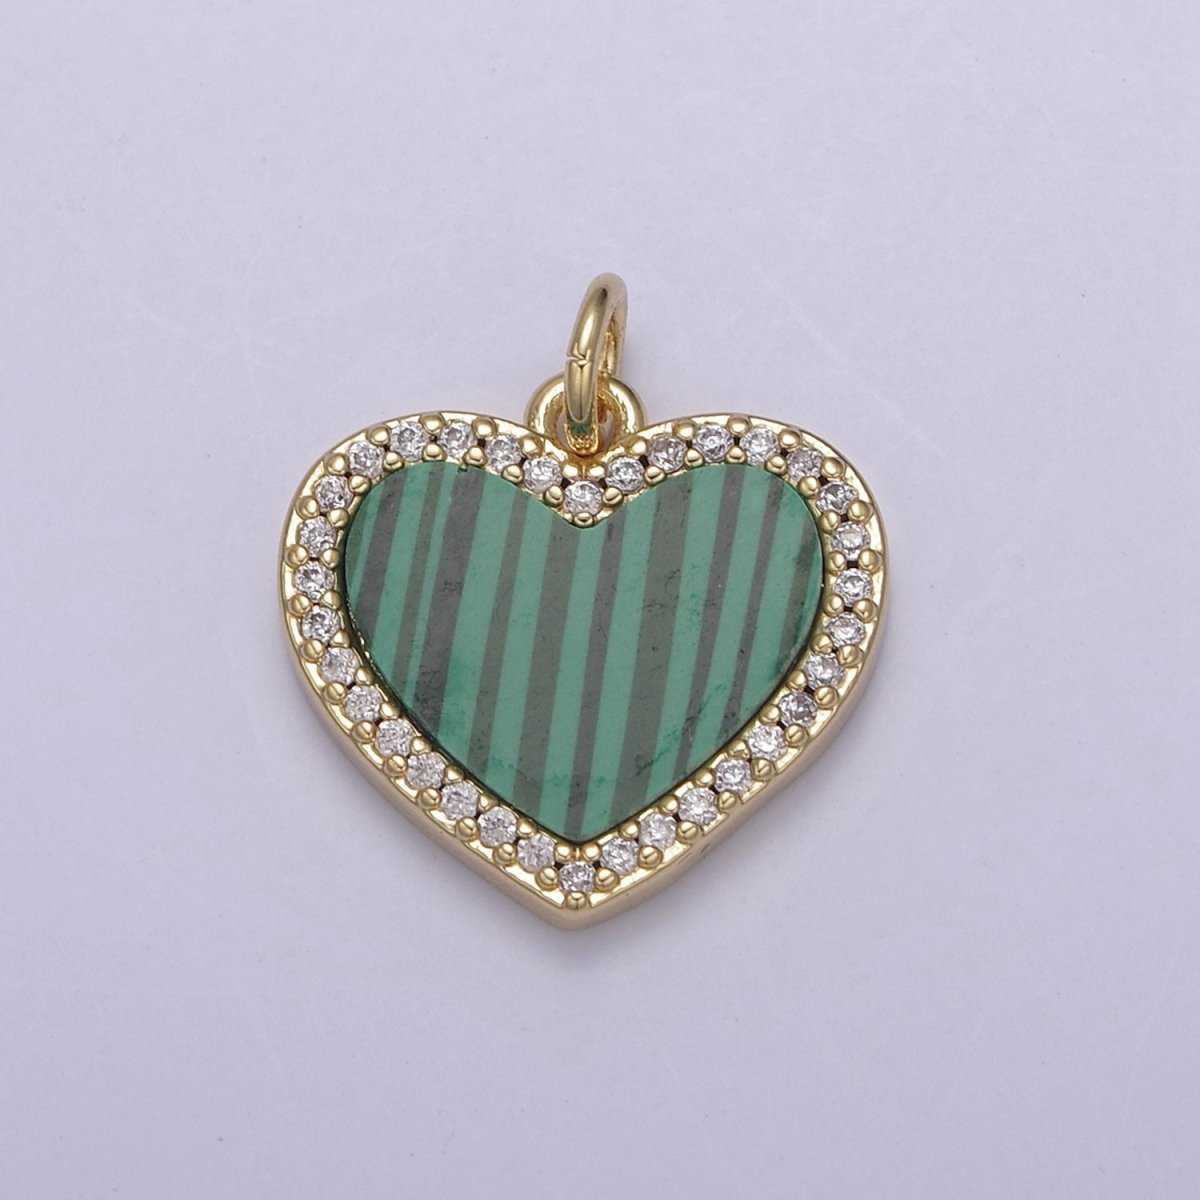 Gemstone Heart Charm, Boho Heart Pendant for Necklace, Turquoise Heart Pendant, Malachite Heart Pendant, Tiger Eye Pearl Abalone Heart Charm for Jewelry Making N-896 - N-900 - DLUXCA